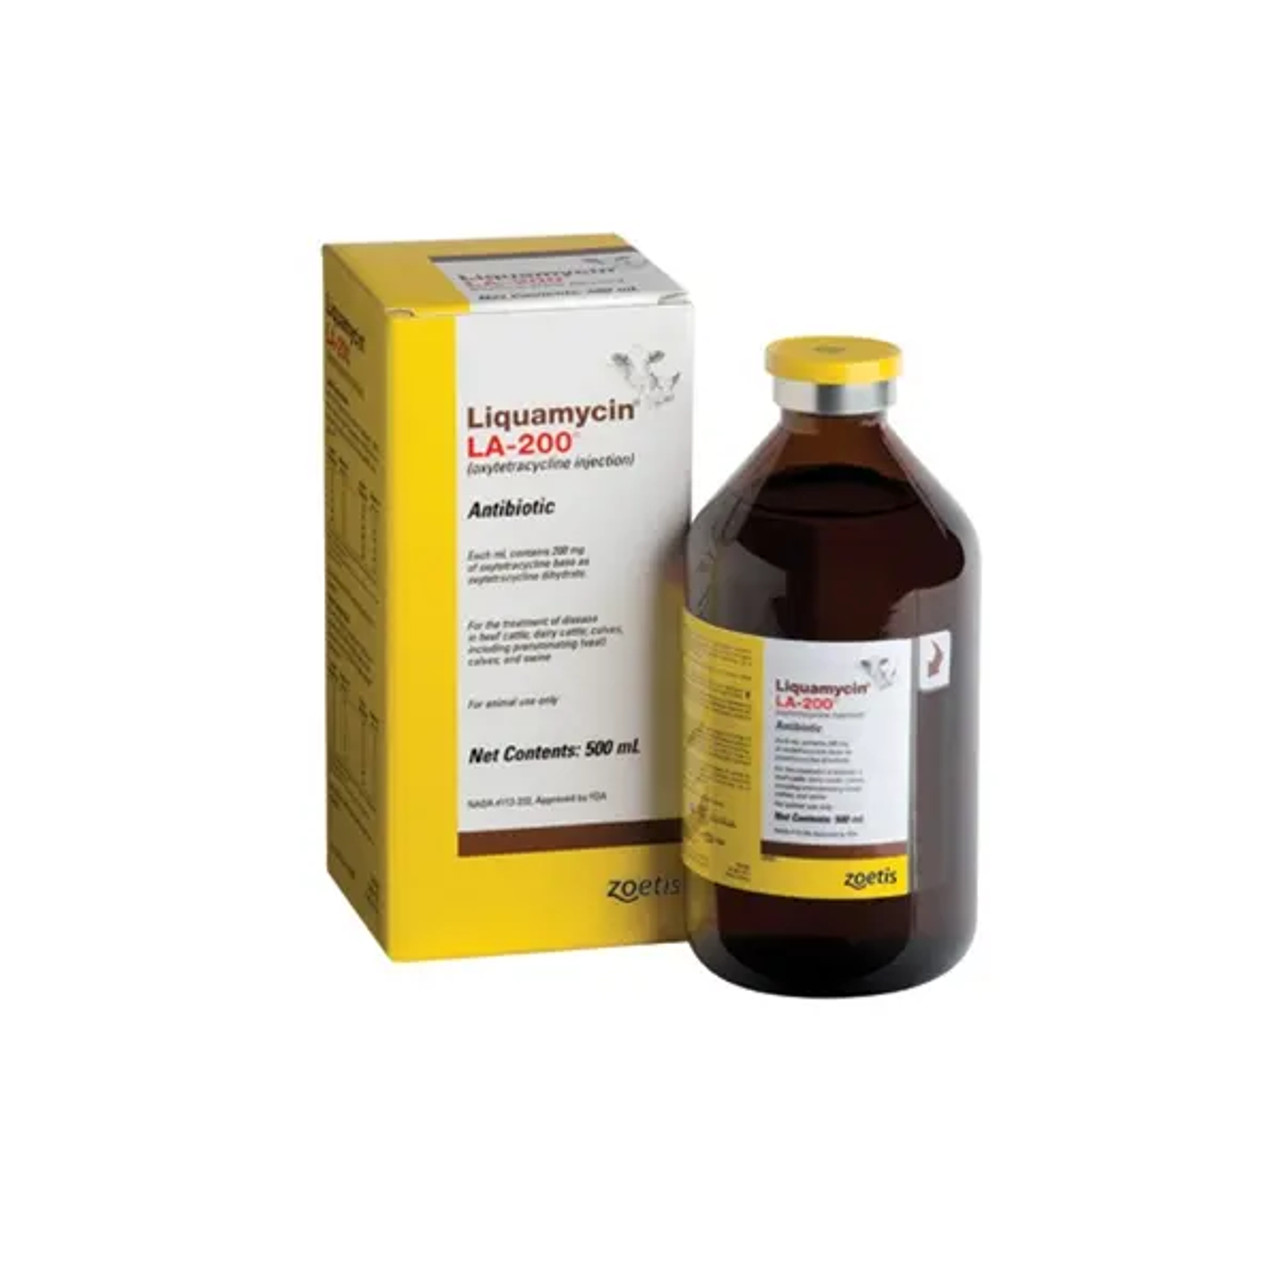 Liquamycin LA-200 Antibiotic *In Store Only*